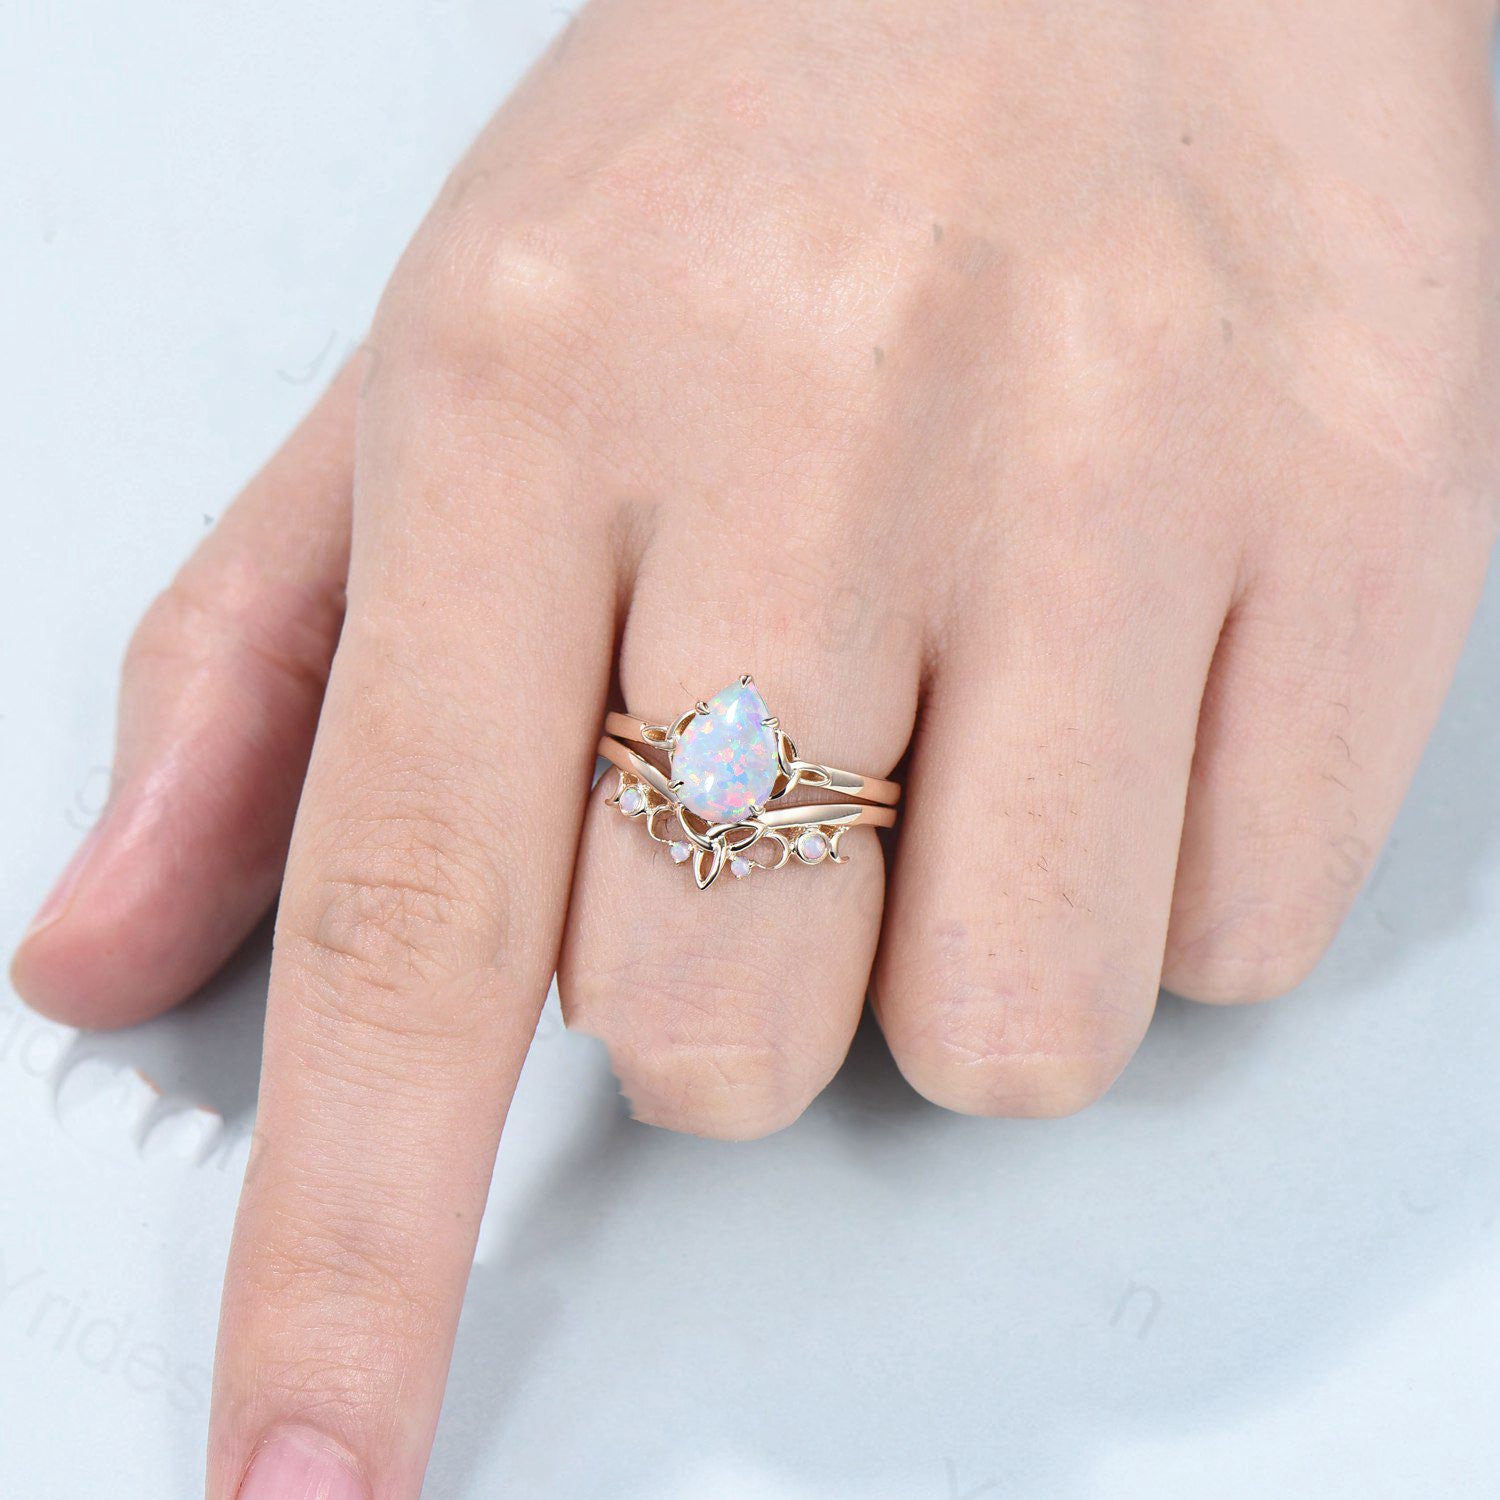 Vintage white opal ring Nose Viking fire opal engagement ring set healing gemstone wedding ring set Unique Celtic Love Knot promise ring - PENFINE